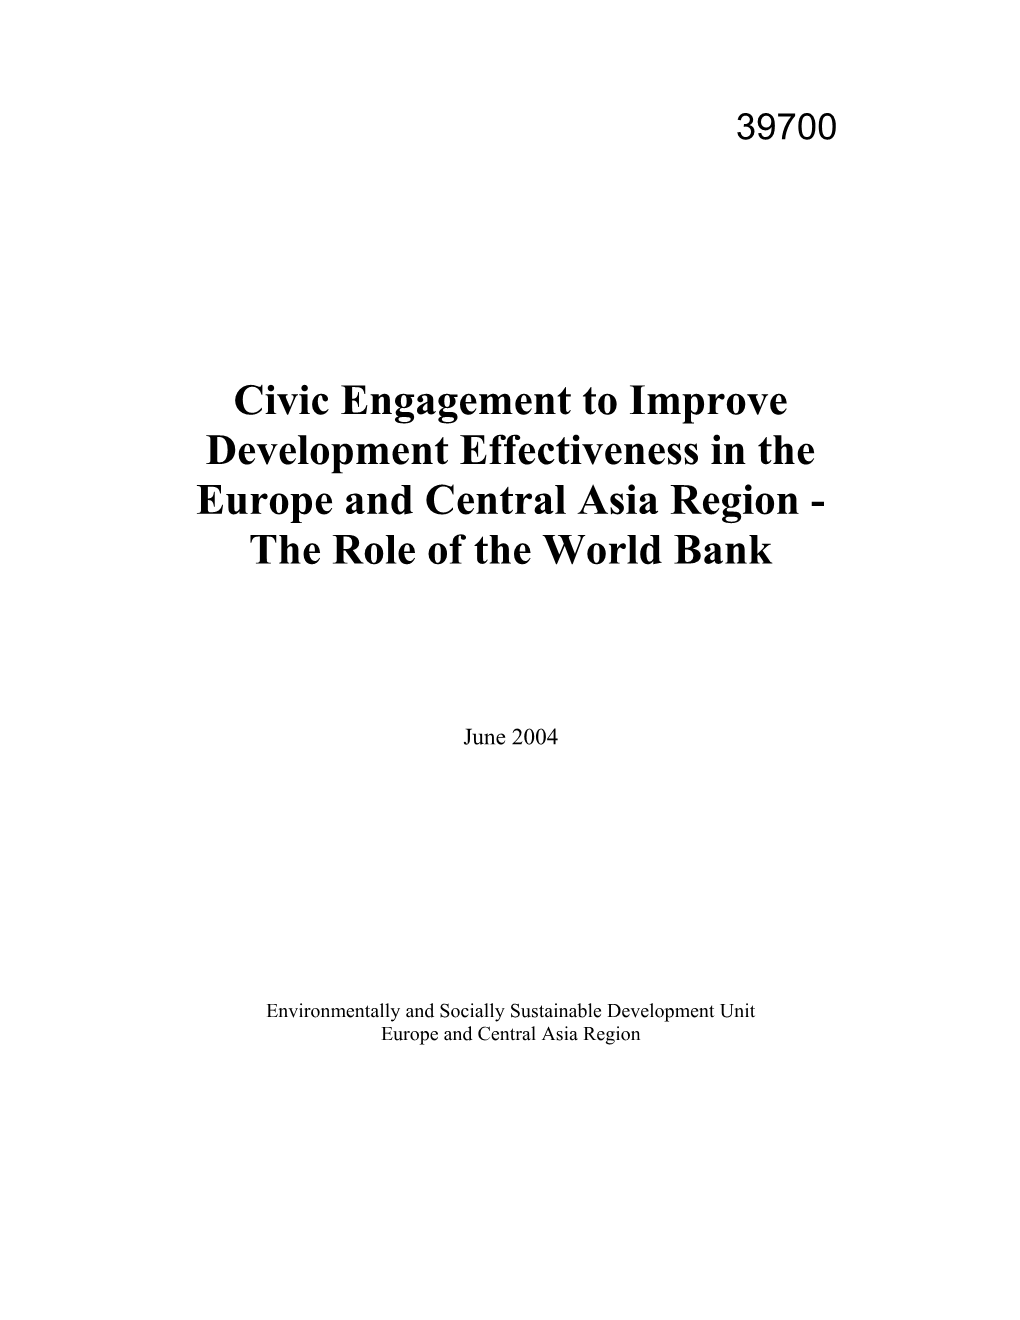 Civic Engagement to Improve Development Effectiveness in ECA